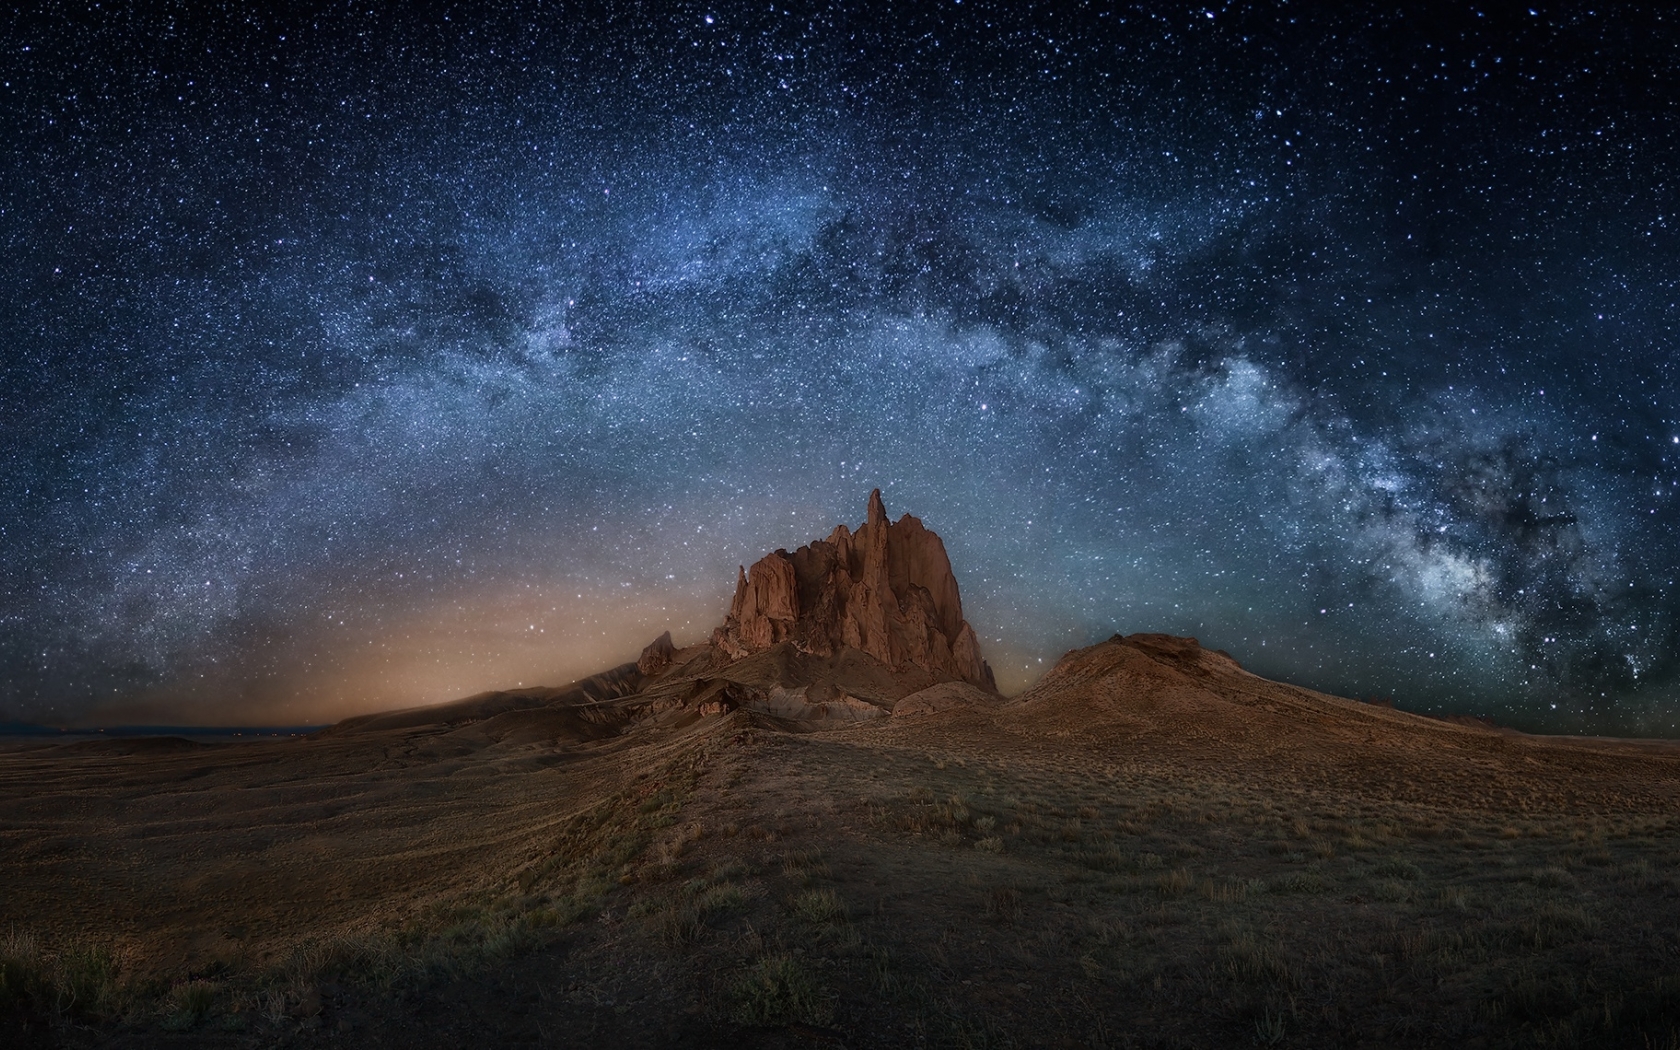 1680x1050 Rock Landscape At Milky Way Night 1680x1050 Resolution